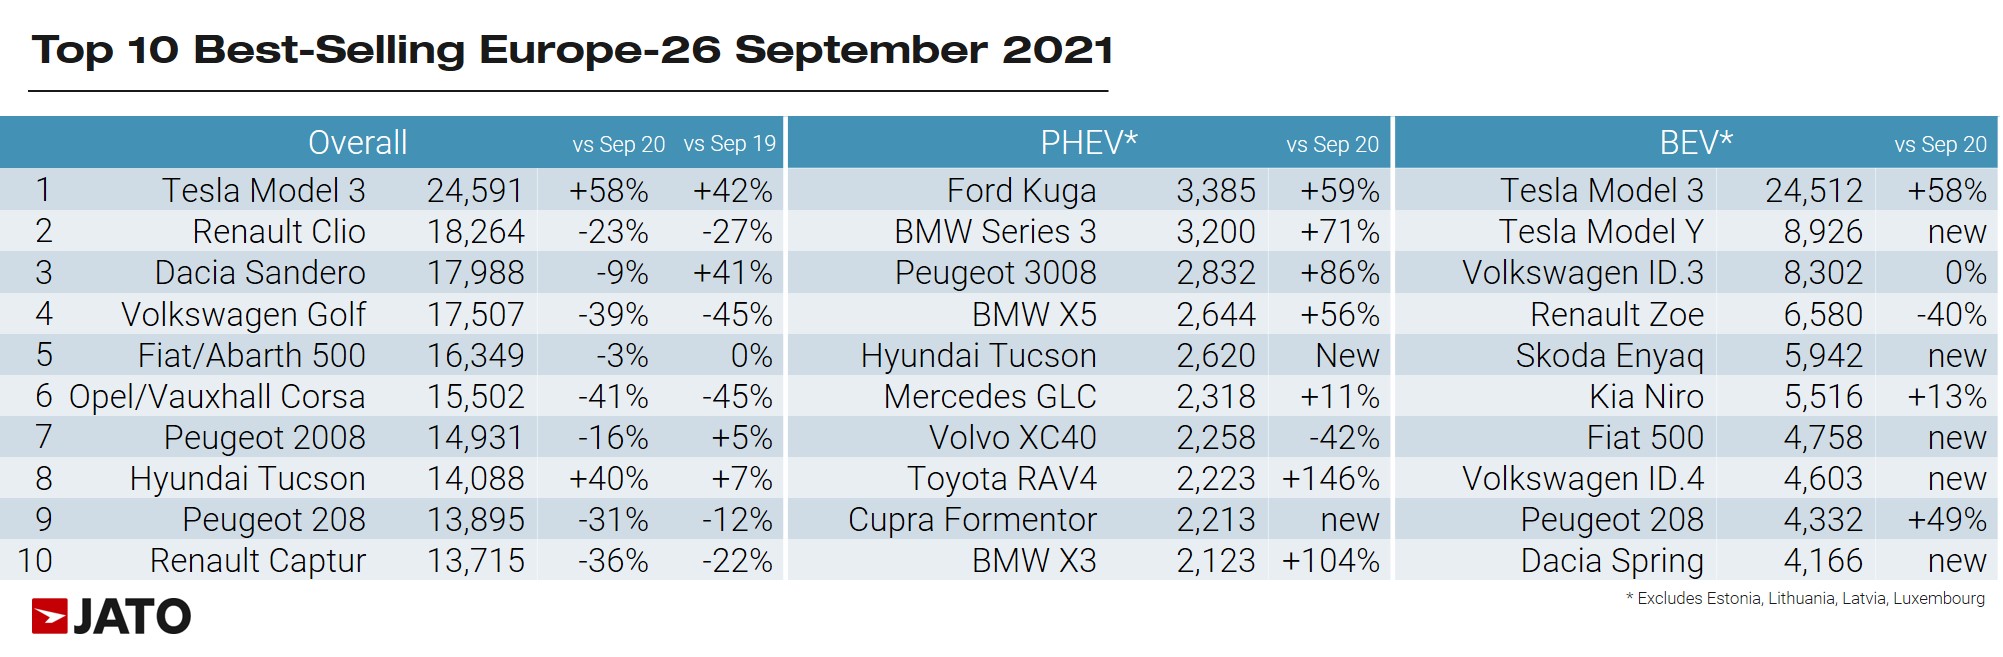 europe-car-sales-9-2021-source-jato-dynamics-b.jpg